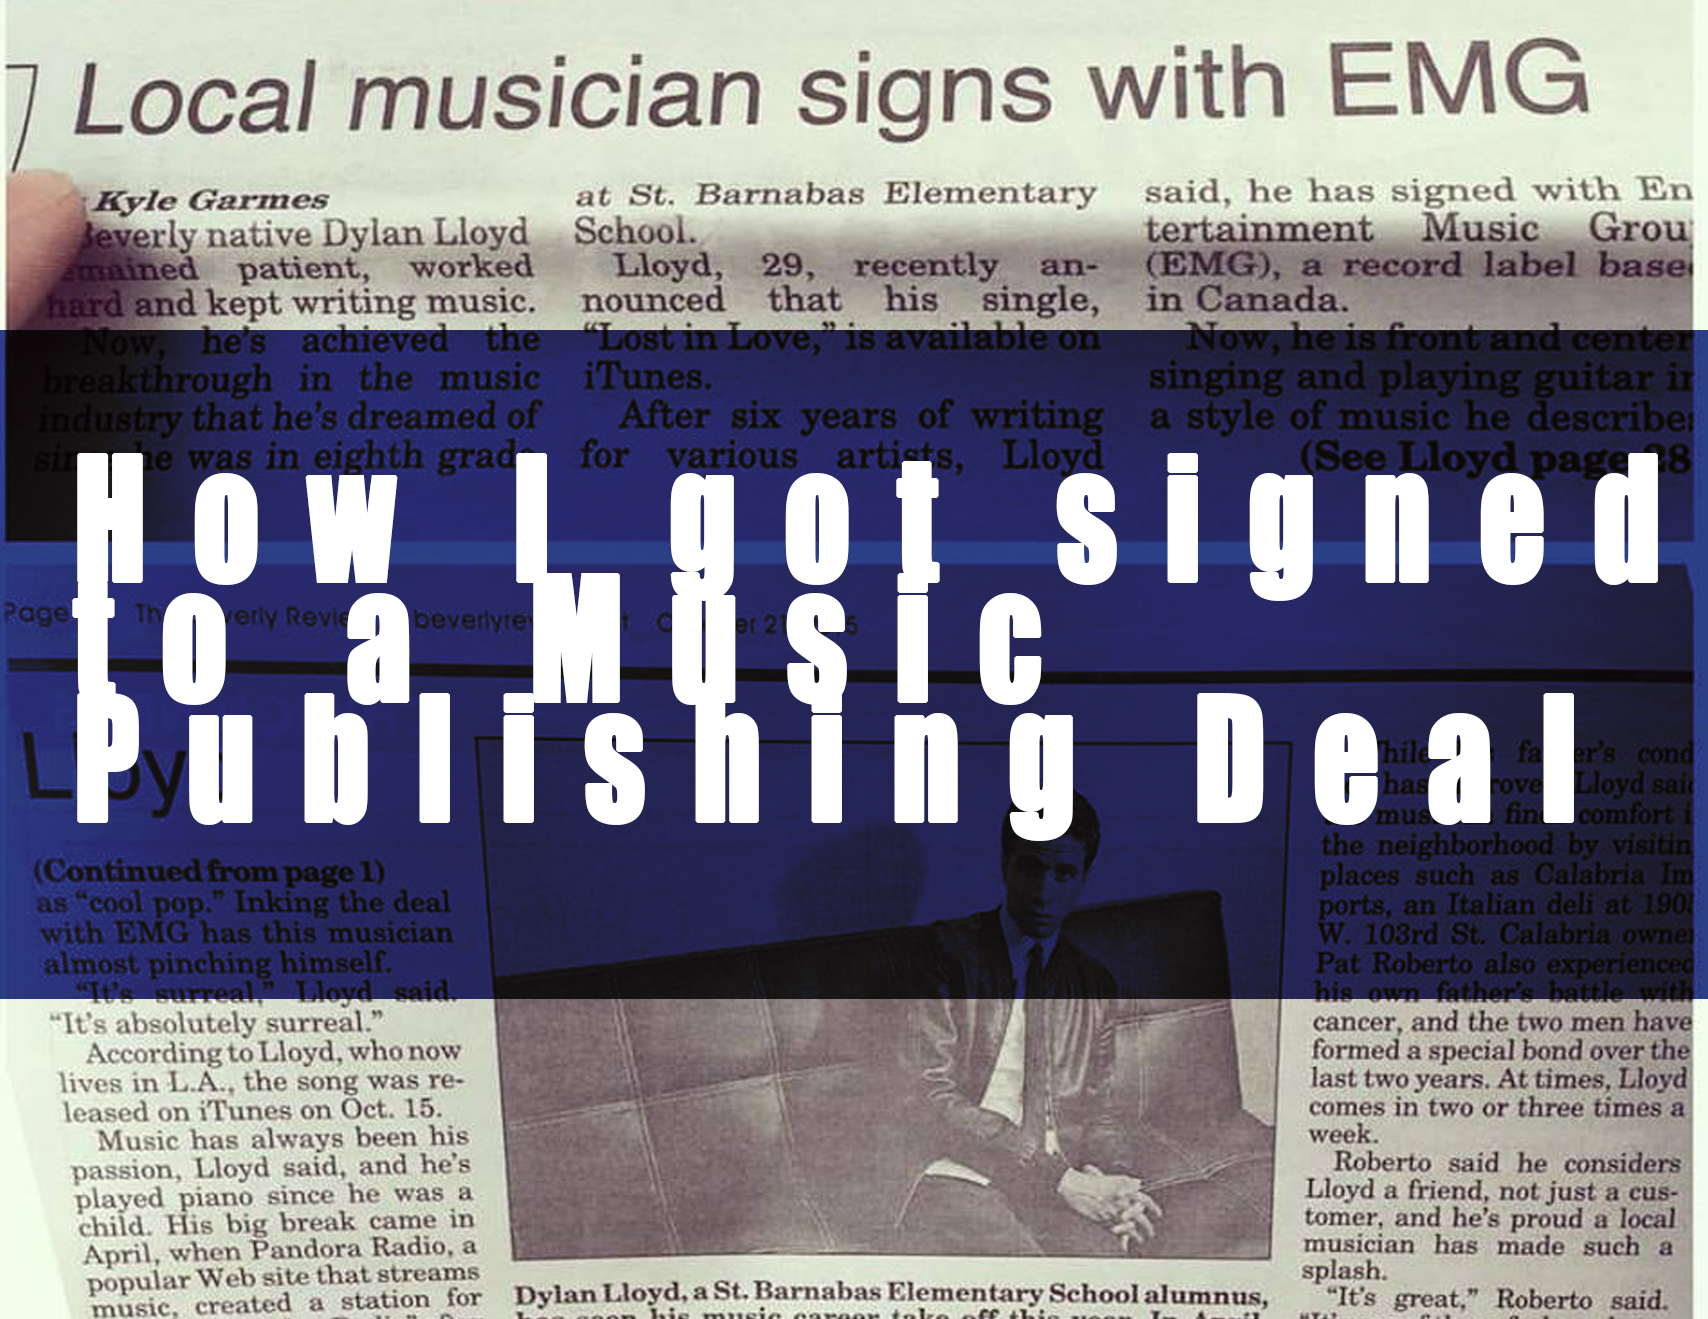 Music Publishing Deal